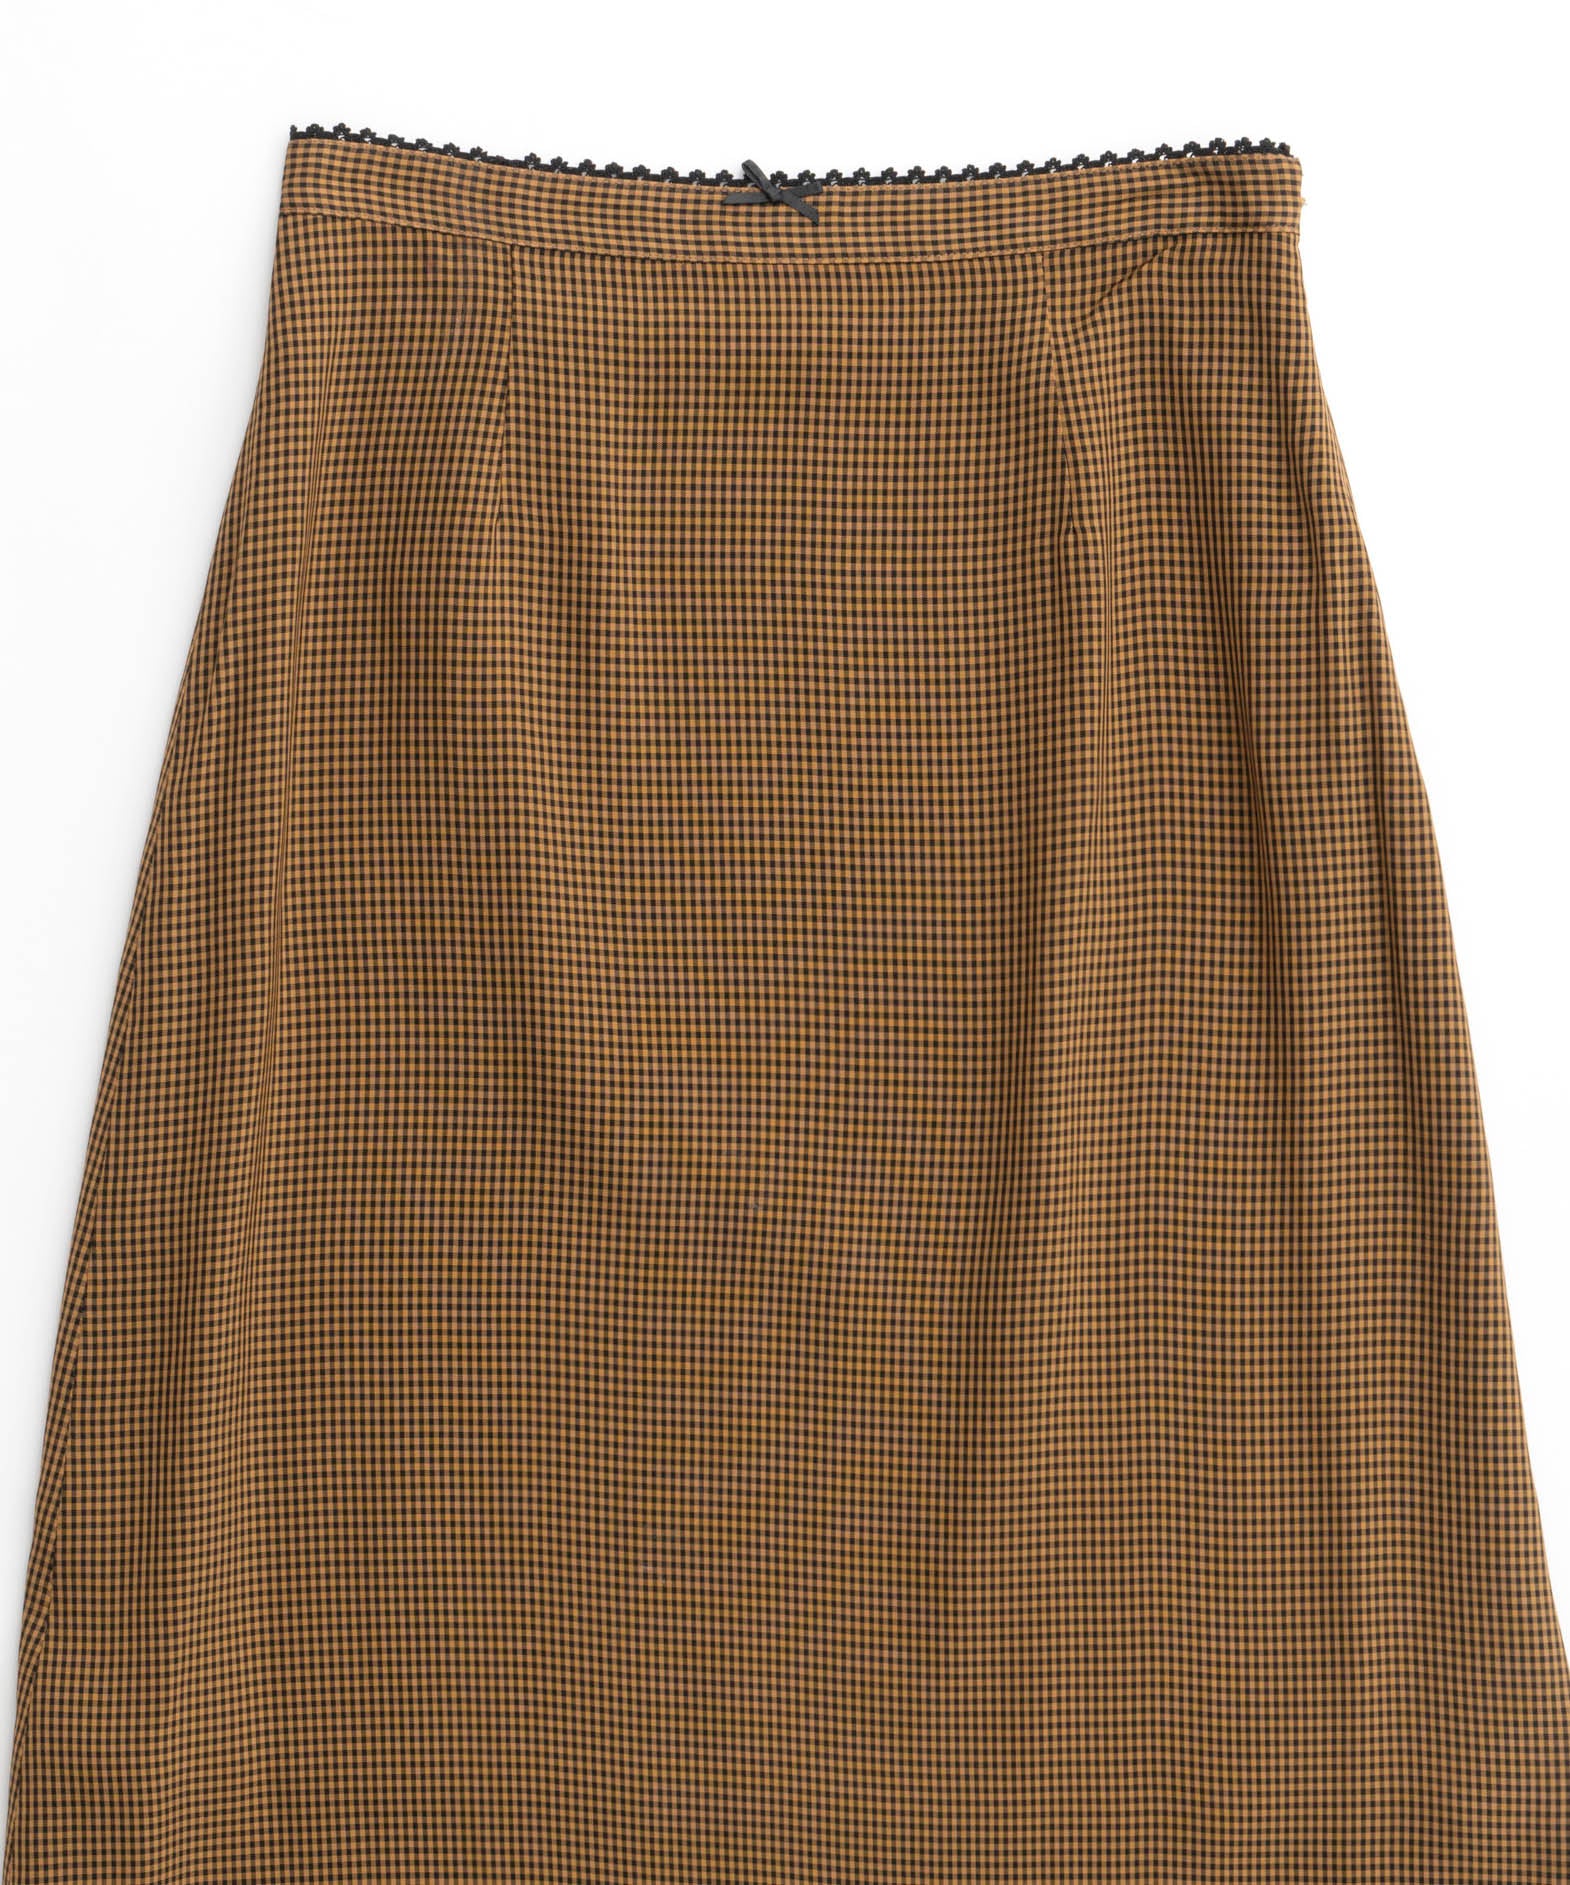 【24AUTUMN PRE-ORDER】Gingham Checkered Maxi Skirt